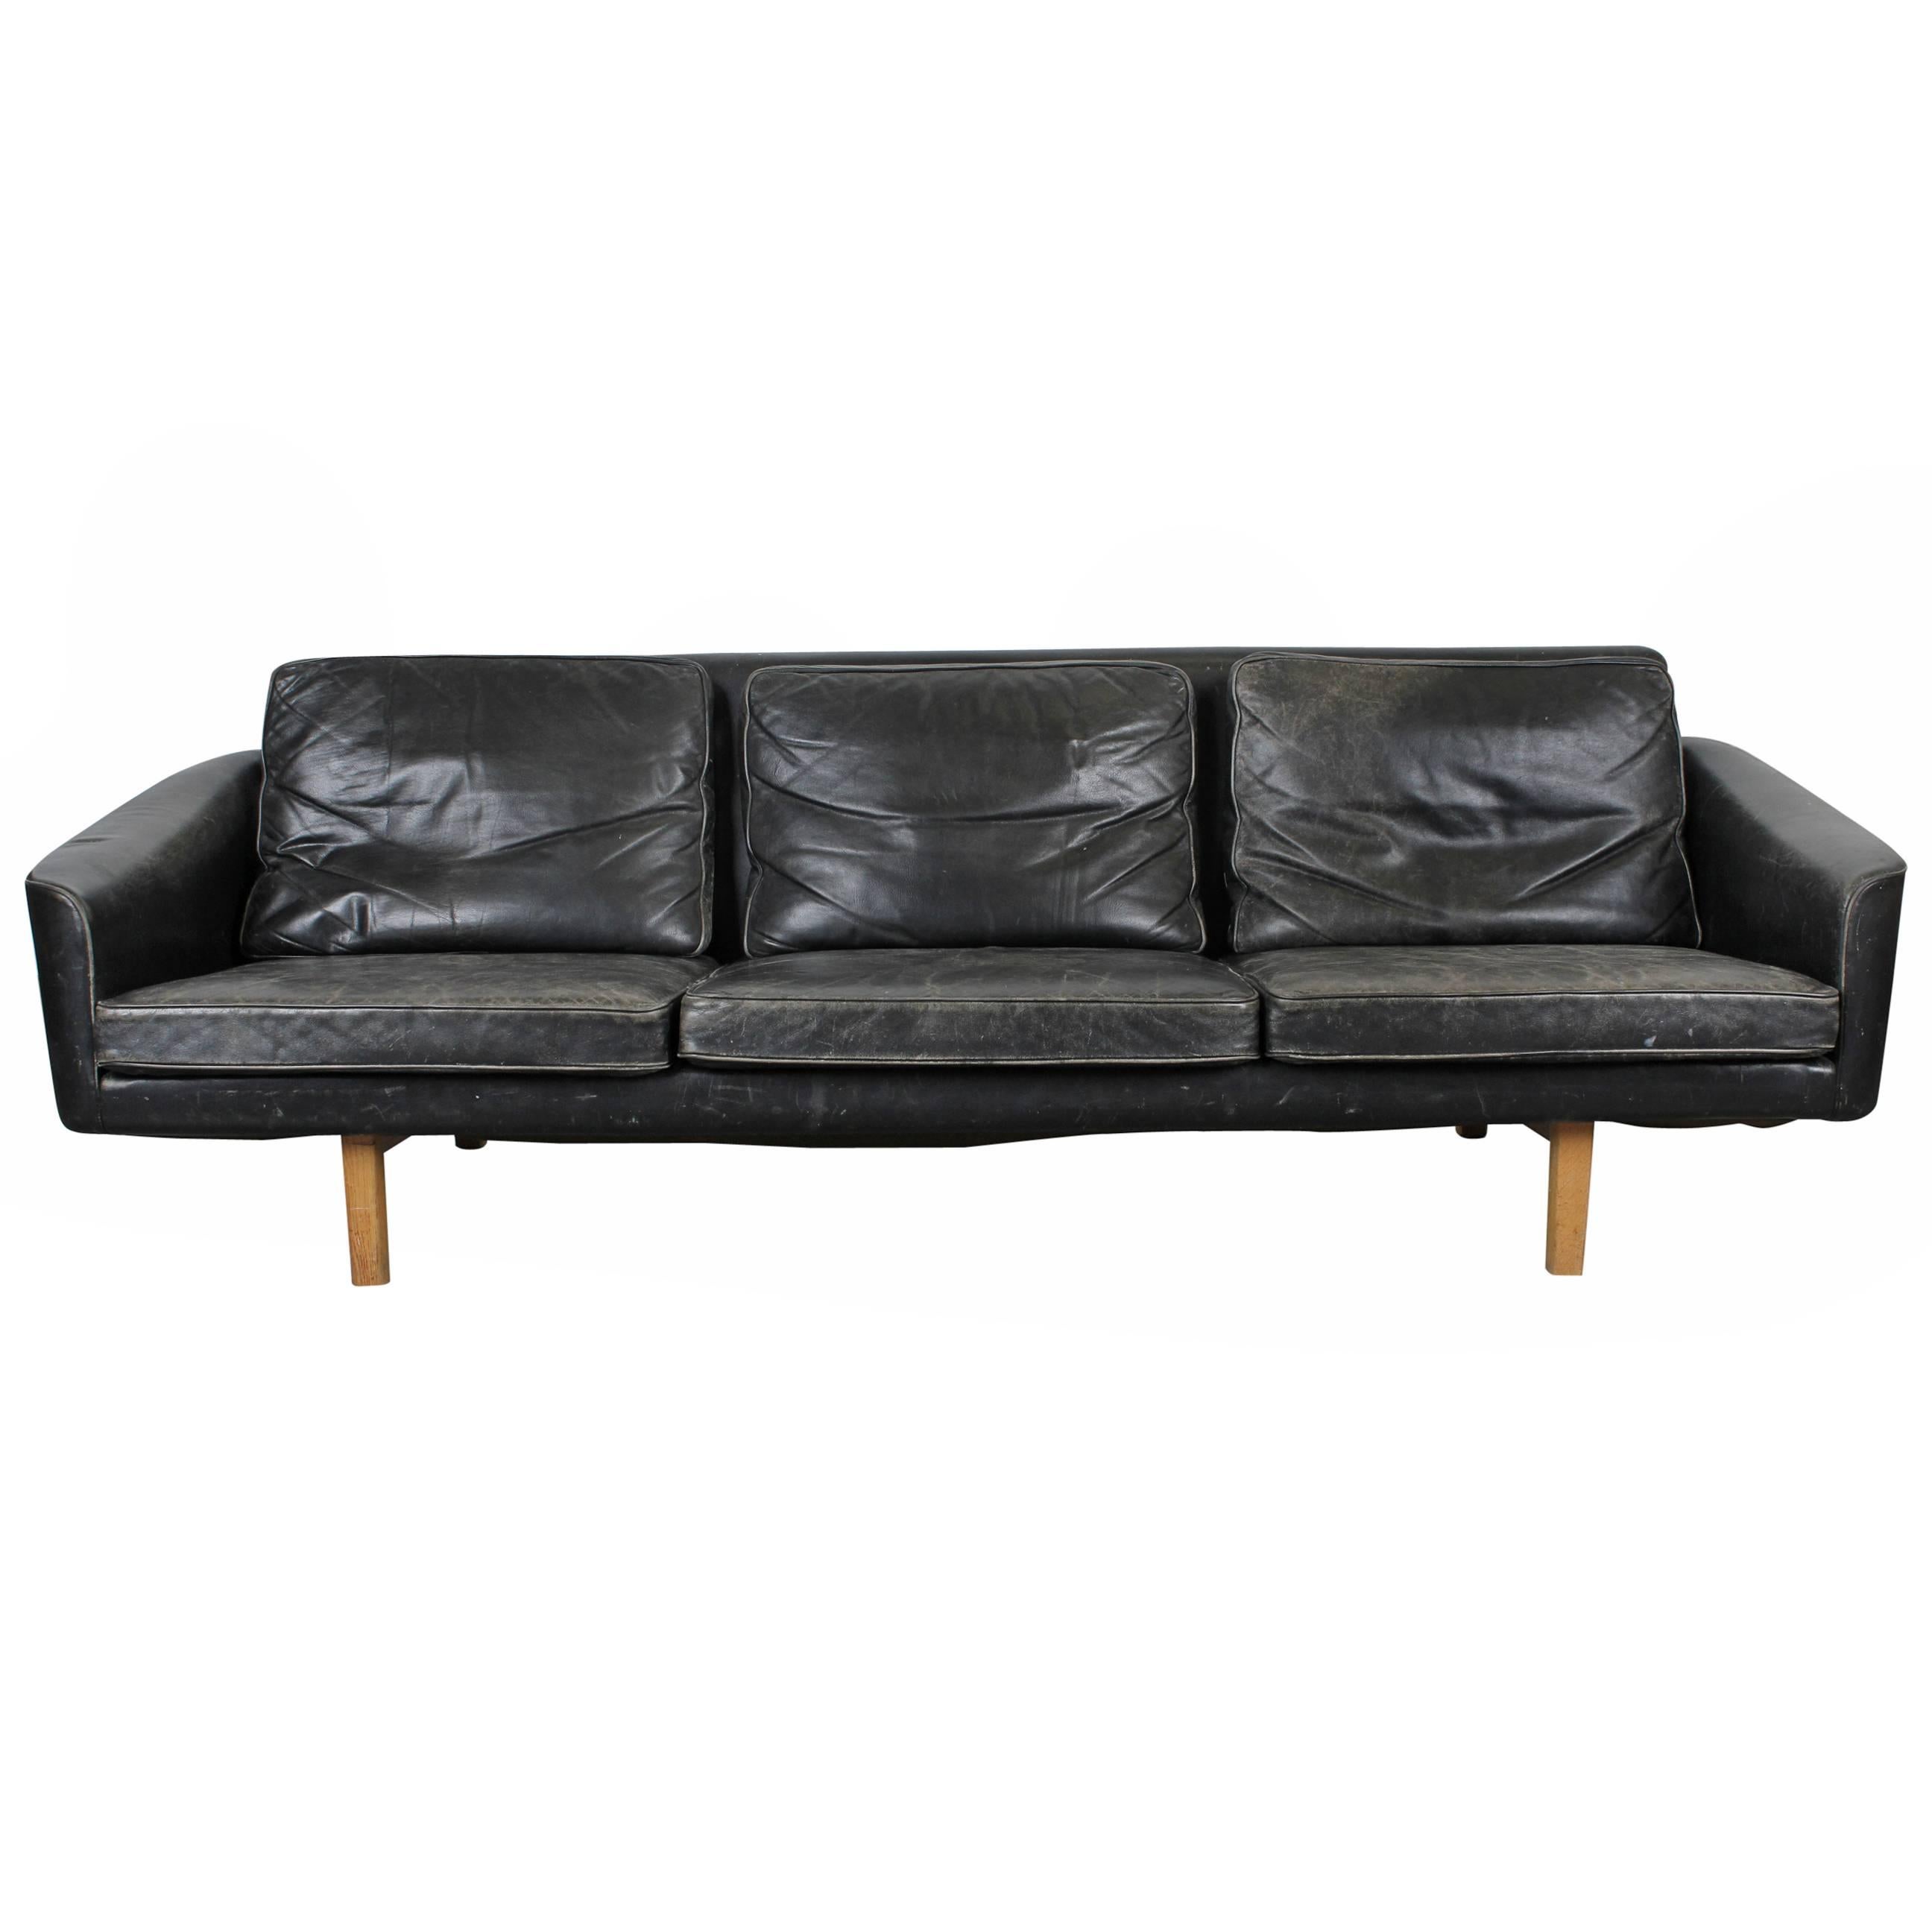 Mid-Century Modern Black Leather Sofa